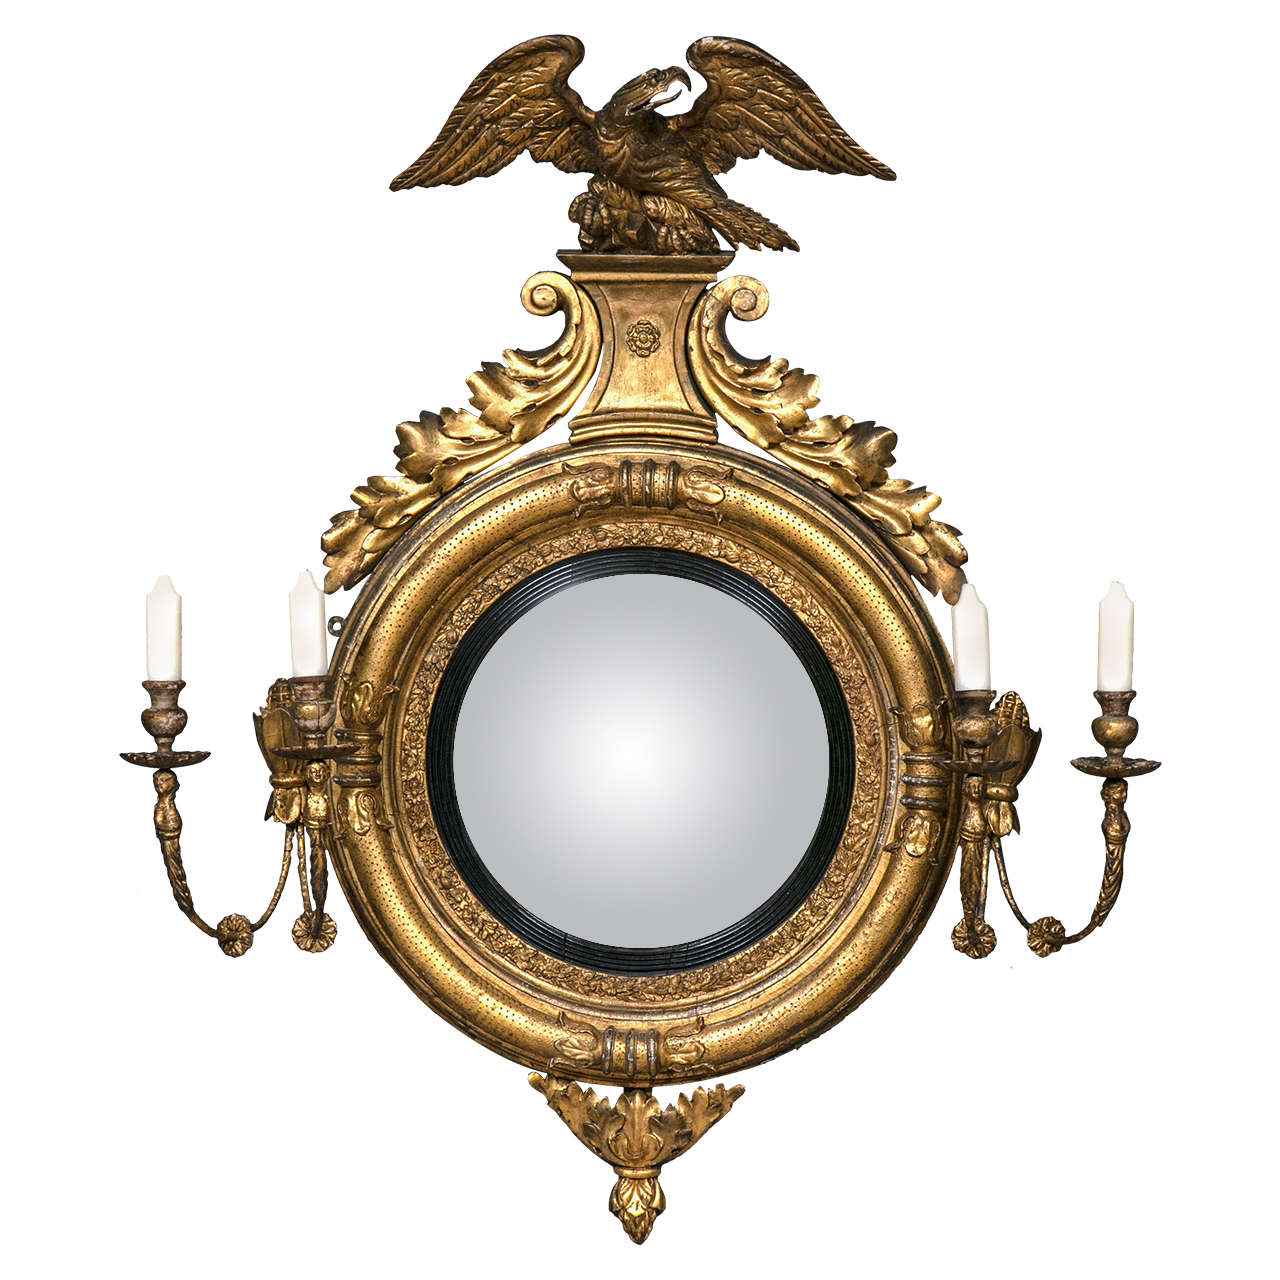 Fine Federal Convex Mirror with Girandola Candles Arms